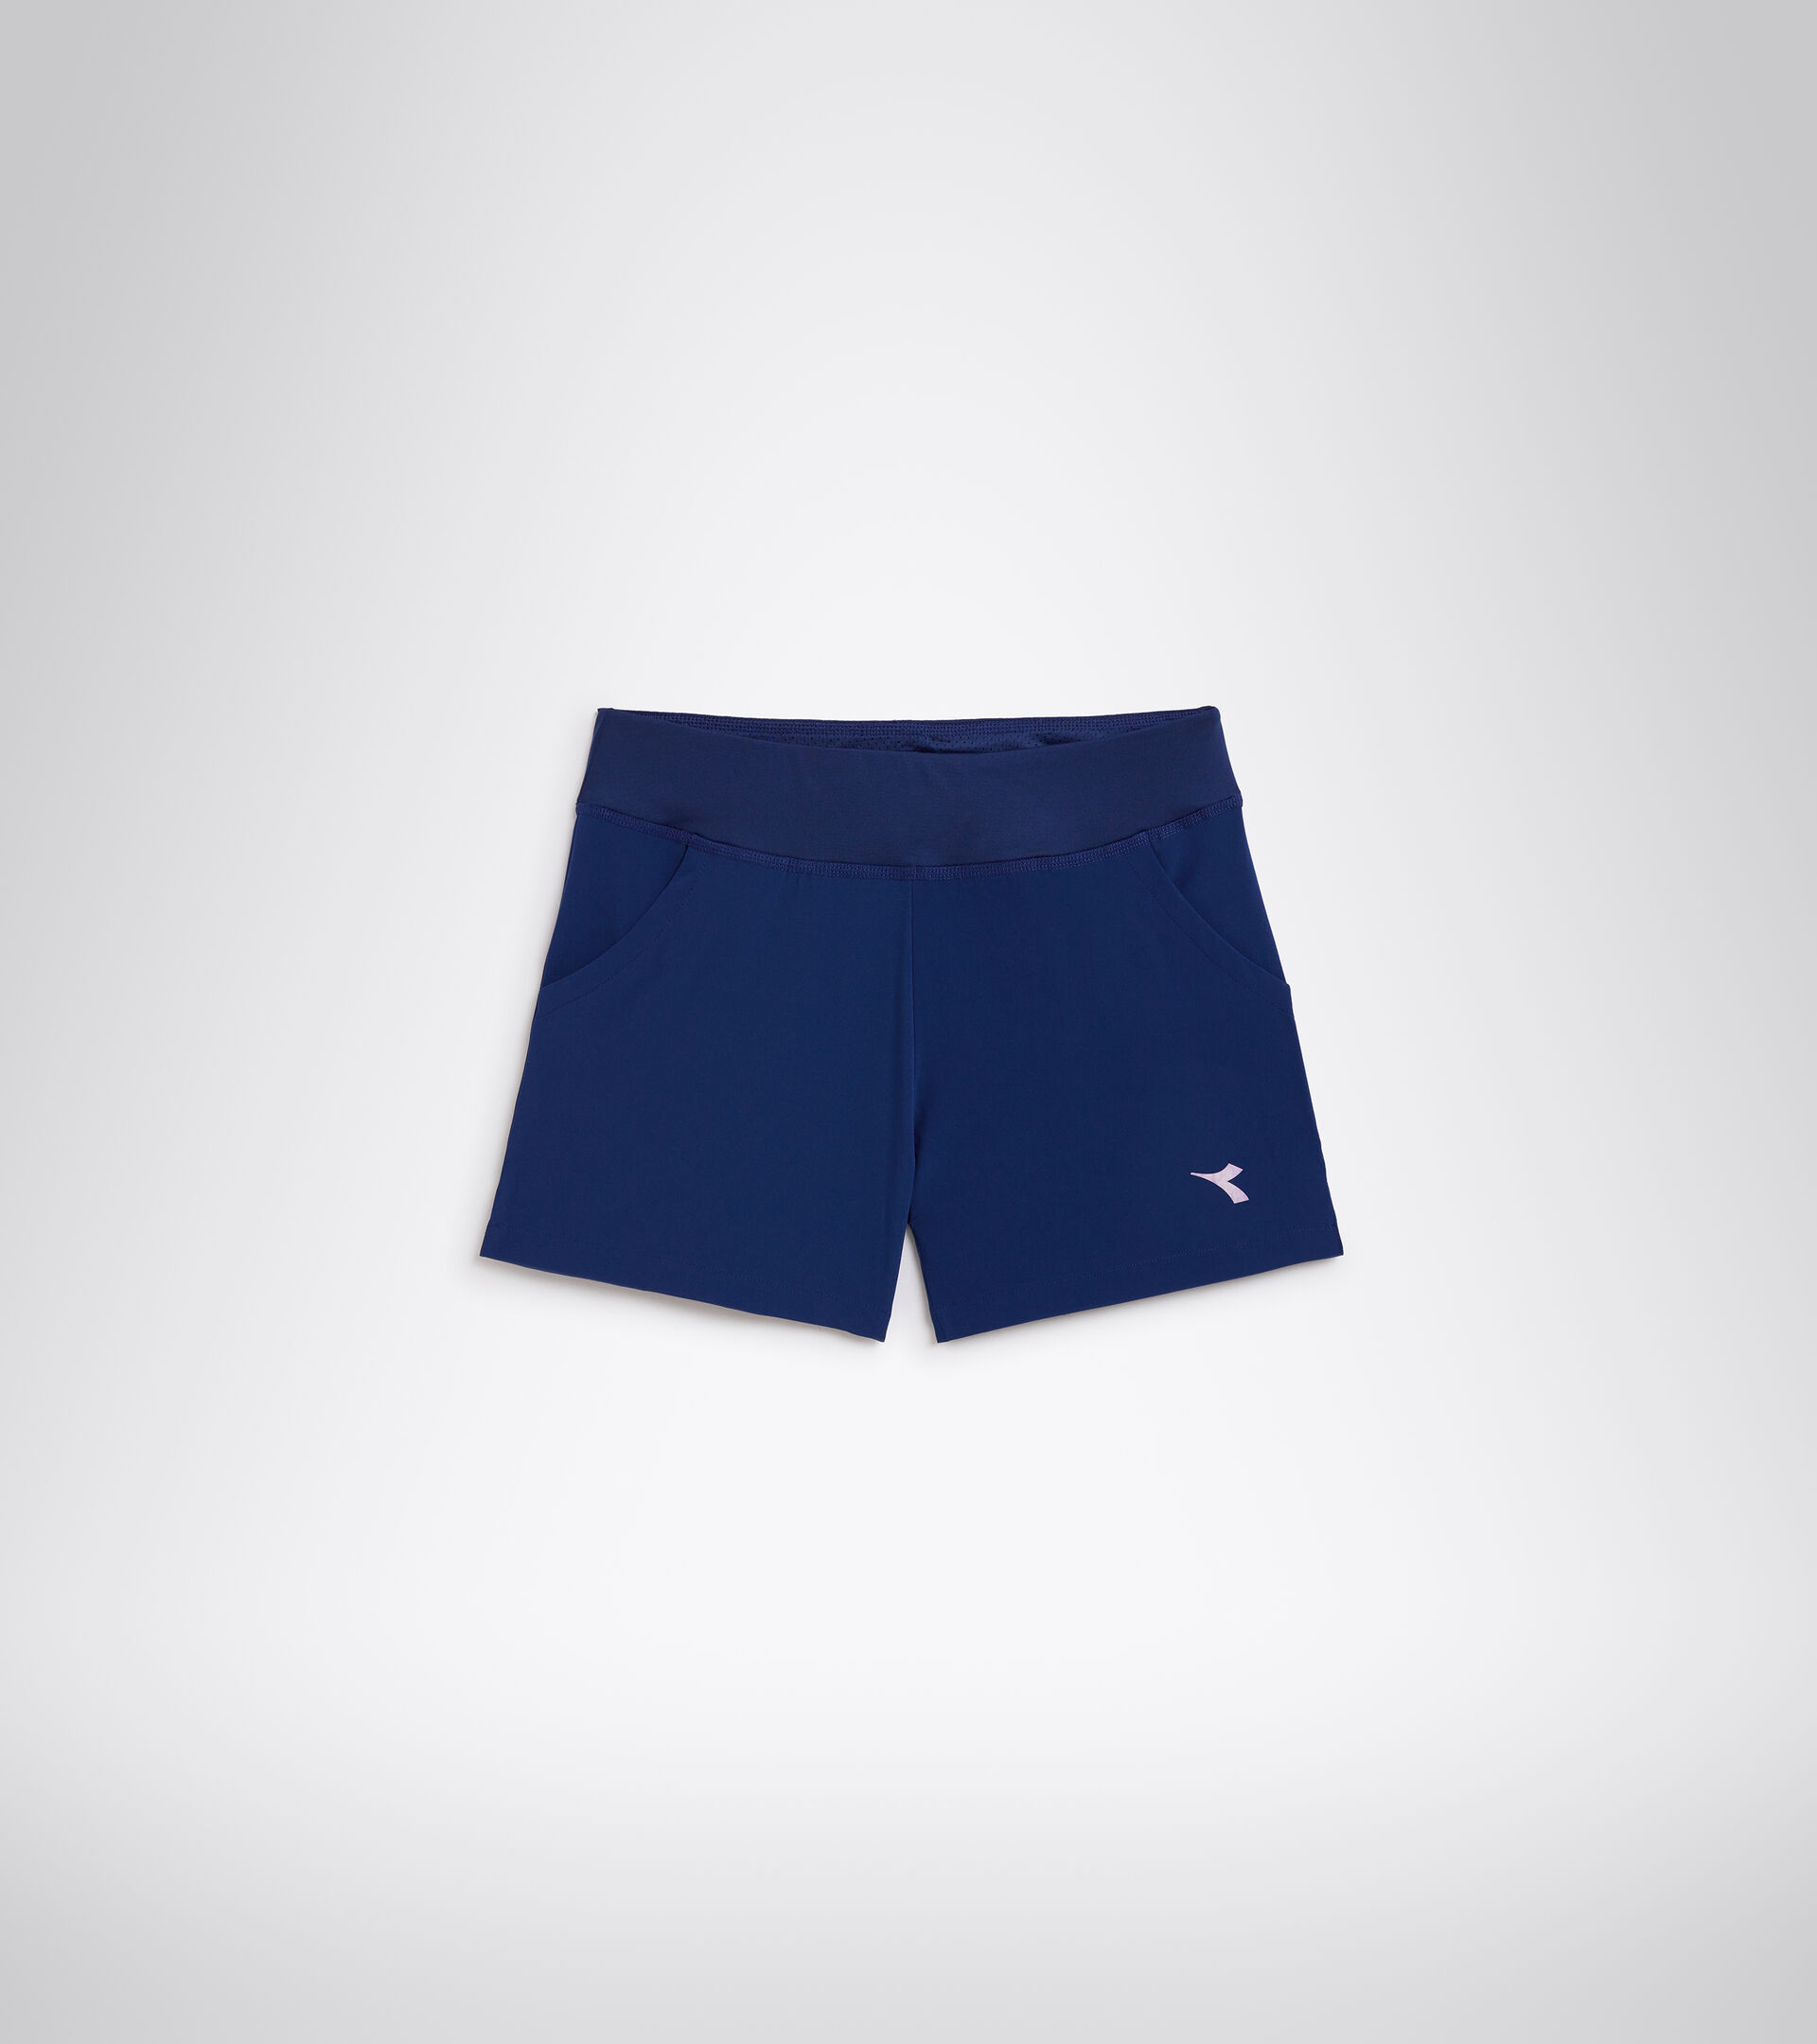 Pantalones cortos de tenis - Mujer L. SHORT COURT AZUL FINCA - Diadora